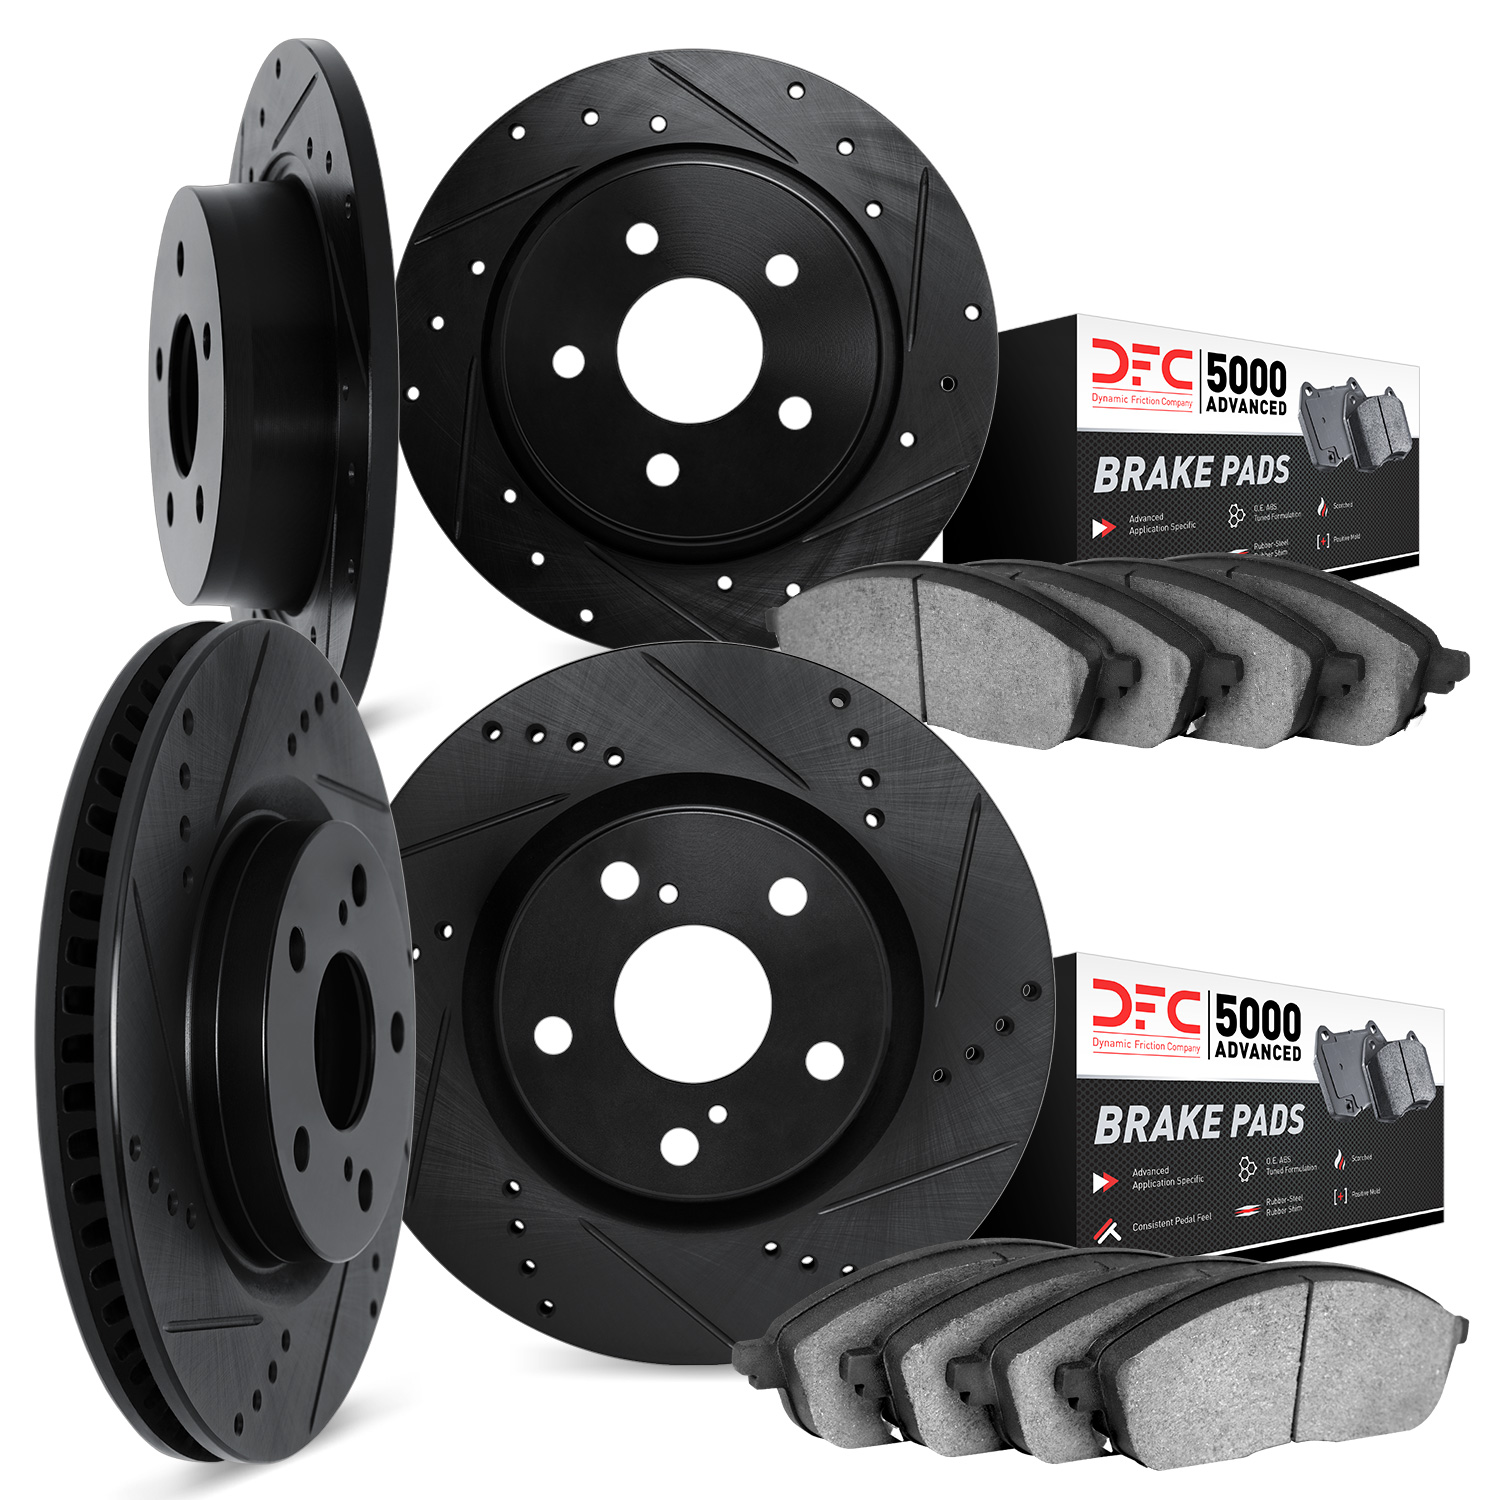 8504-39034 Drilled/Slotted Brake Rotors w/5000 Advanced Brake Pads Kit [Black], 2015-2017 Mopar, Position: Front and Rear